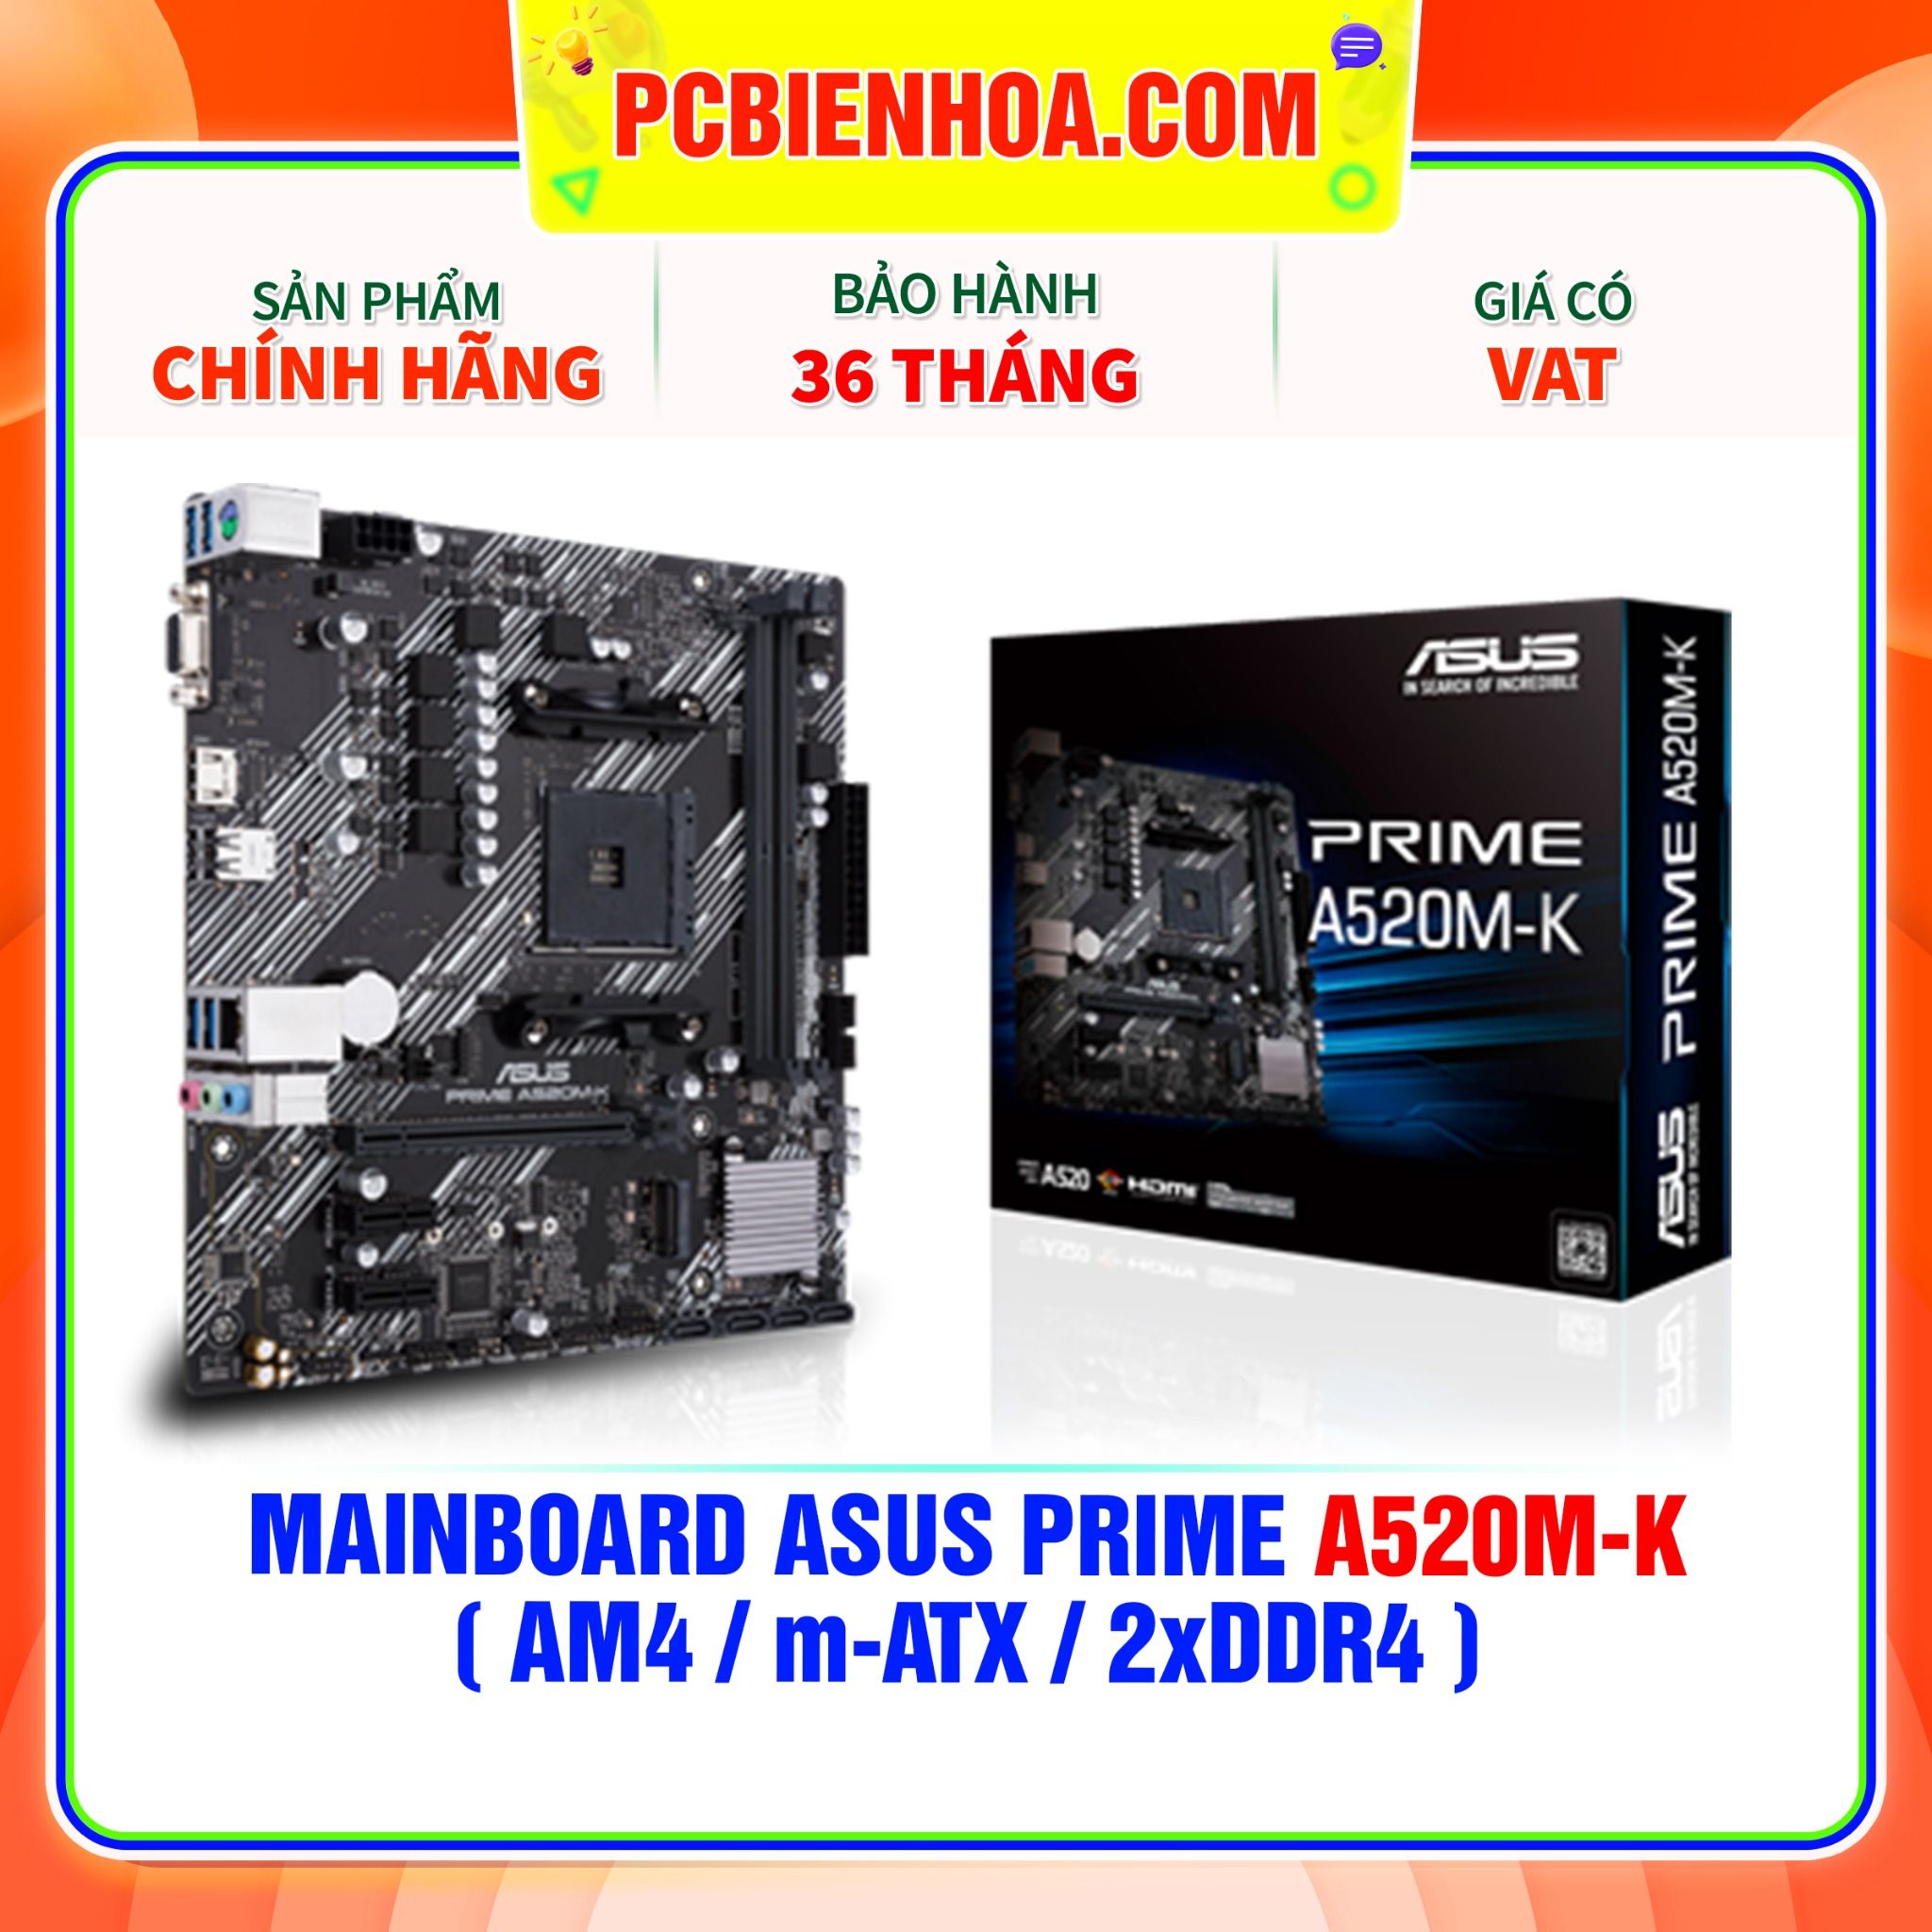  MAINBOARD ASUS PRIME A520M-K ( AM4 / m-ATX / 2xDDR4 ) 